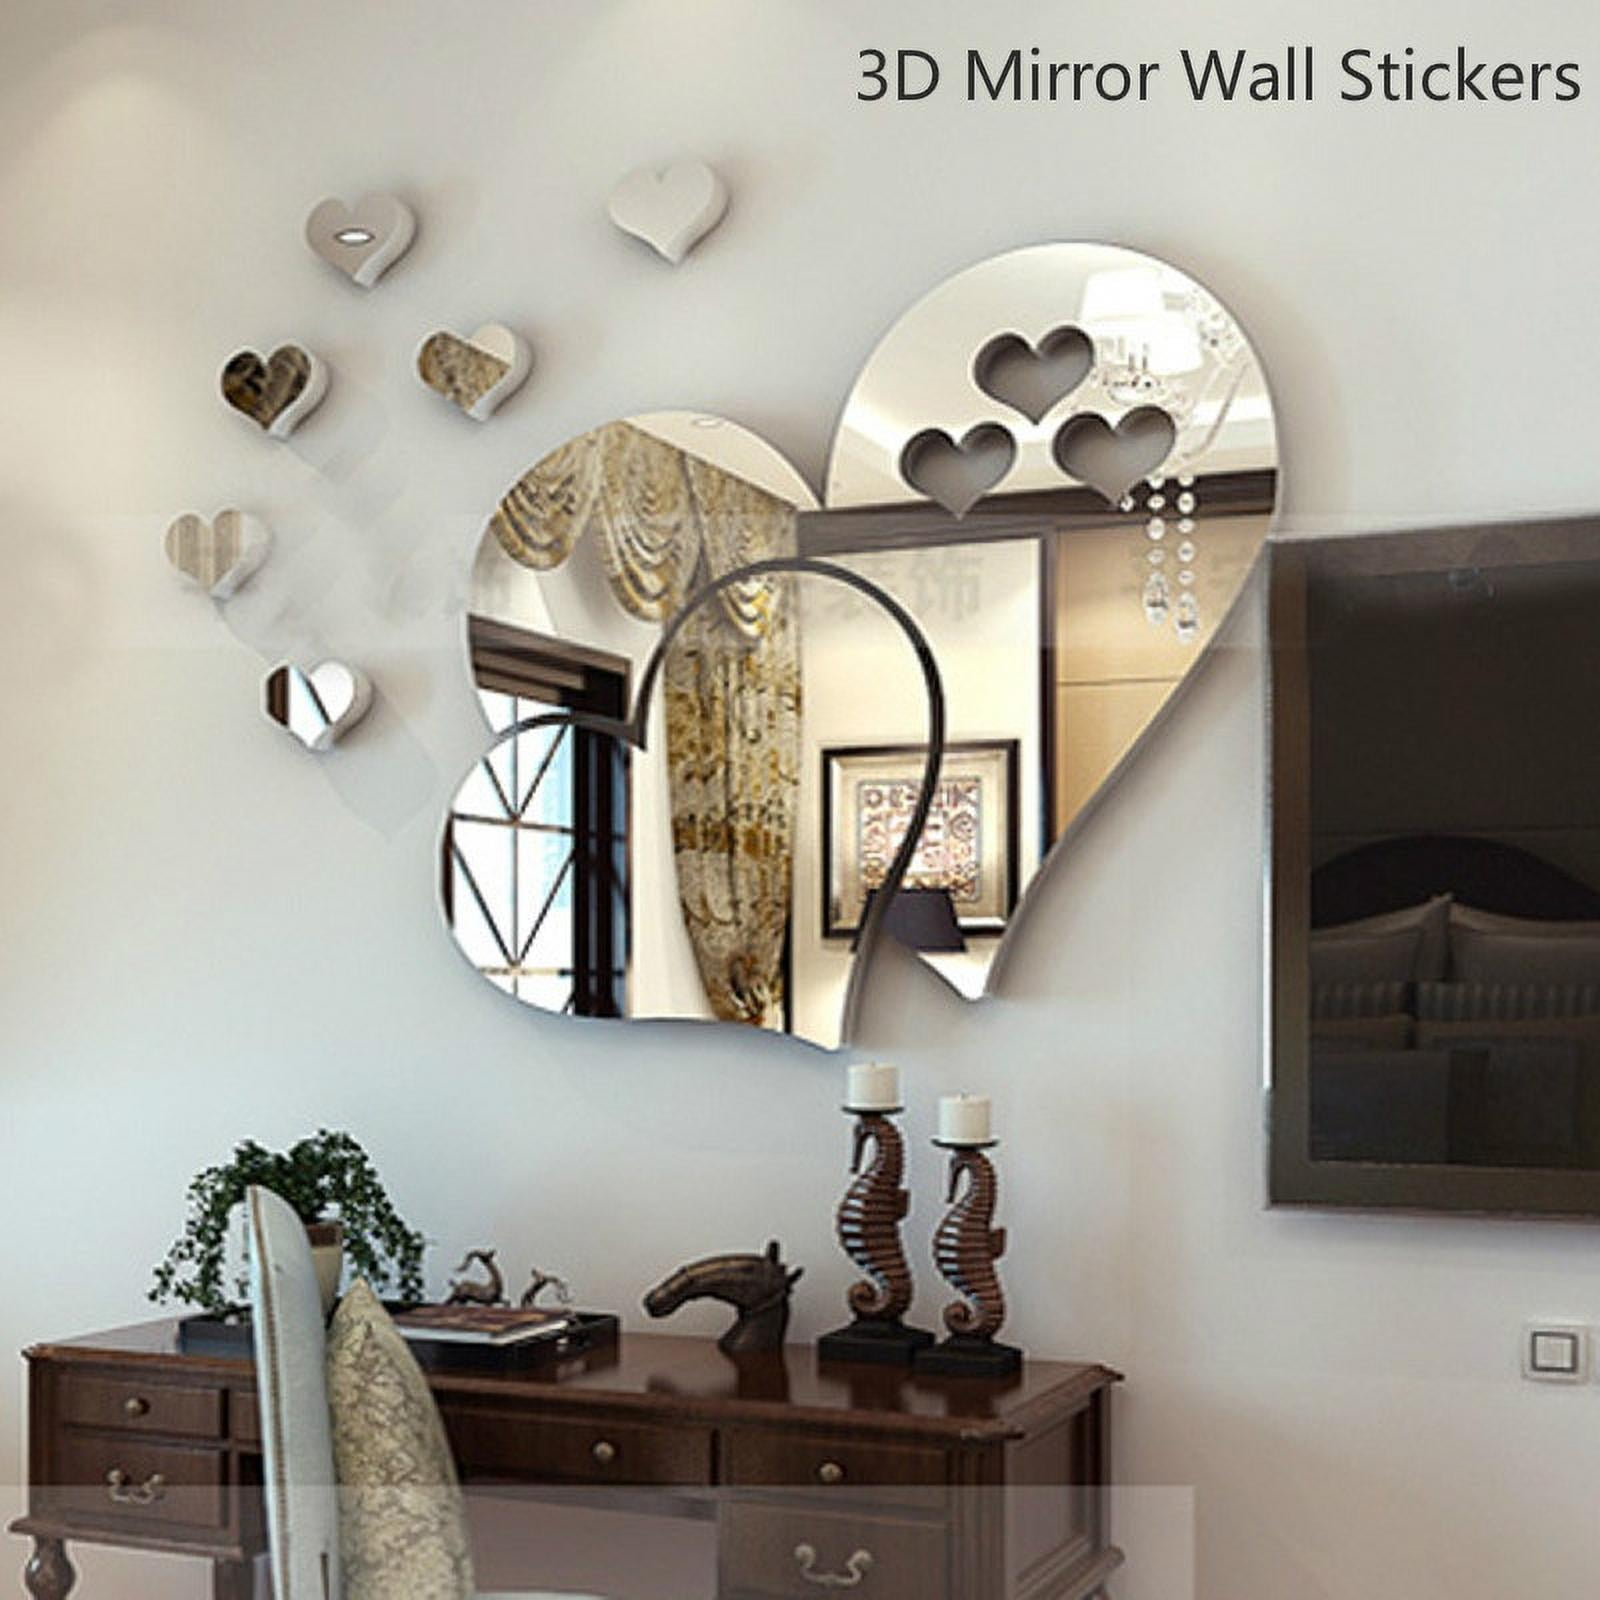 Details about   Heart Shape 3D Mirror Wall Stickers Decal Art Mural Decor newmcx Home Q2C0 